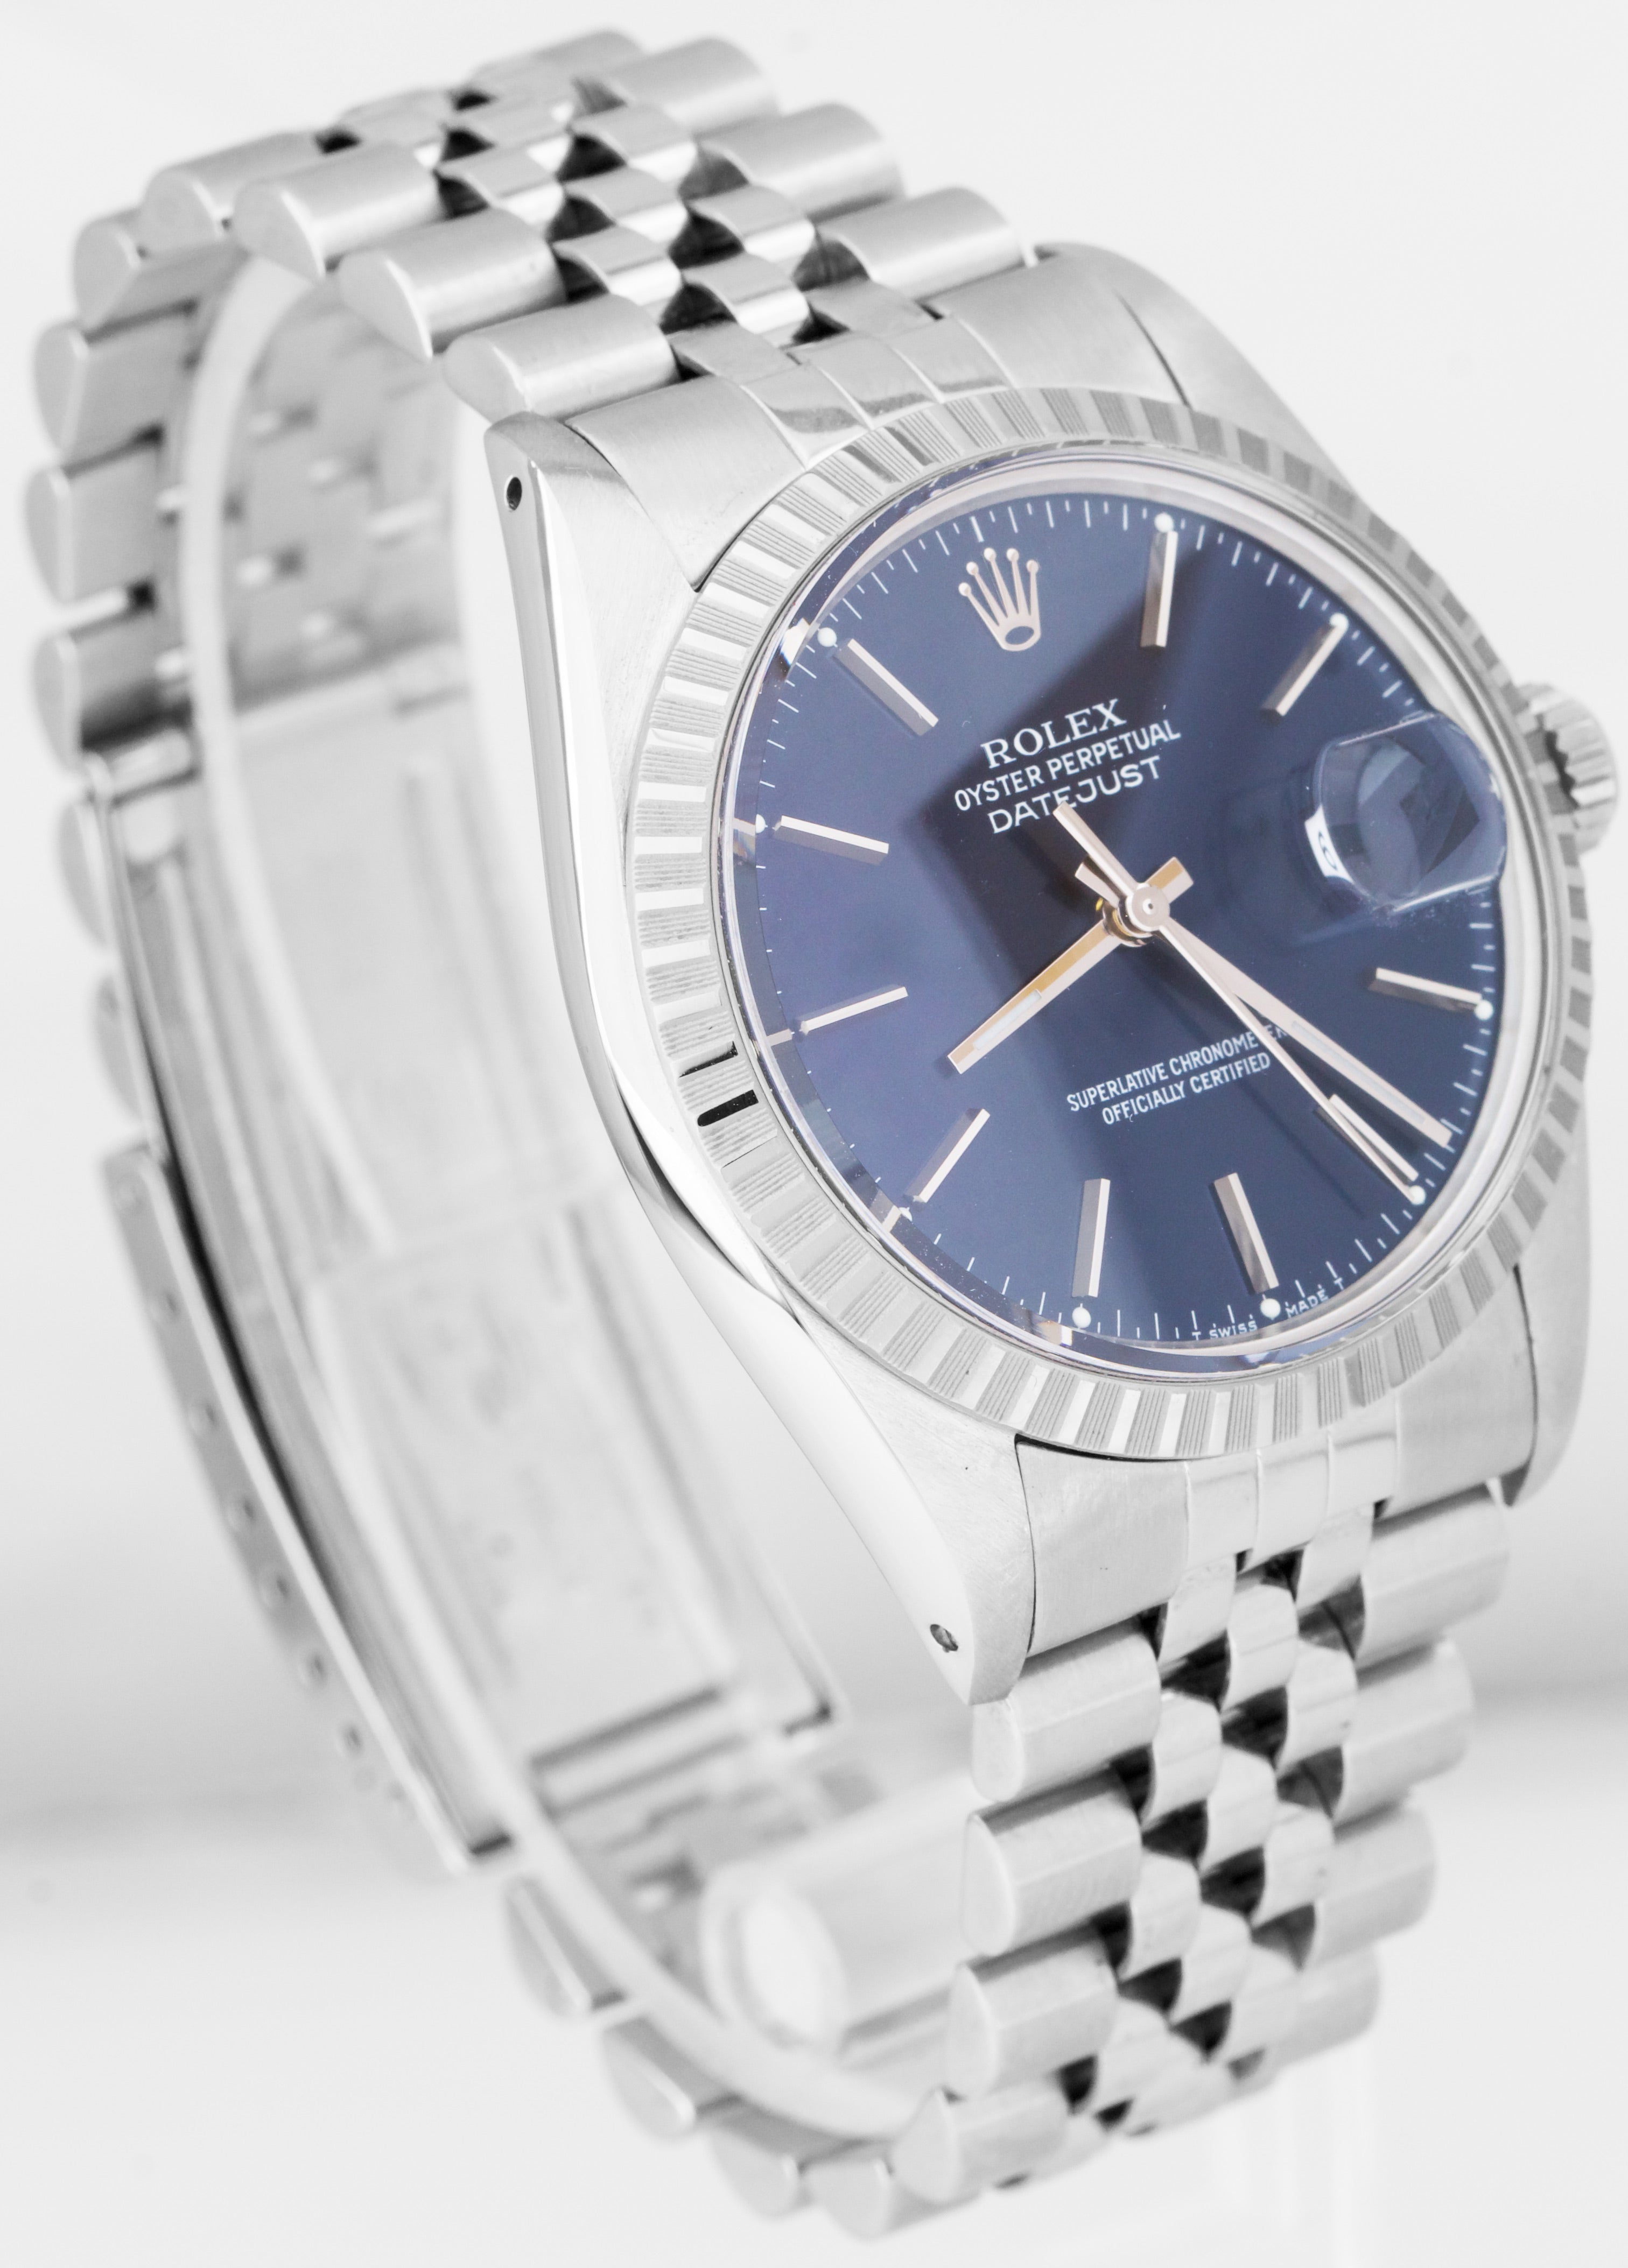 2021 RSC Rolex DateJust 36mm Stainless Steel Blue Jubilee Eng Turned Watch 16030